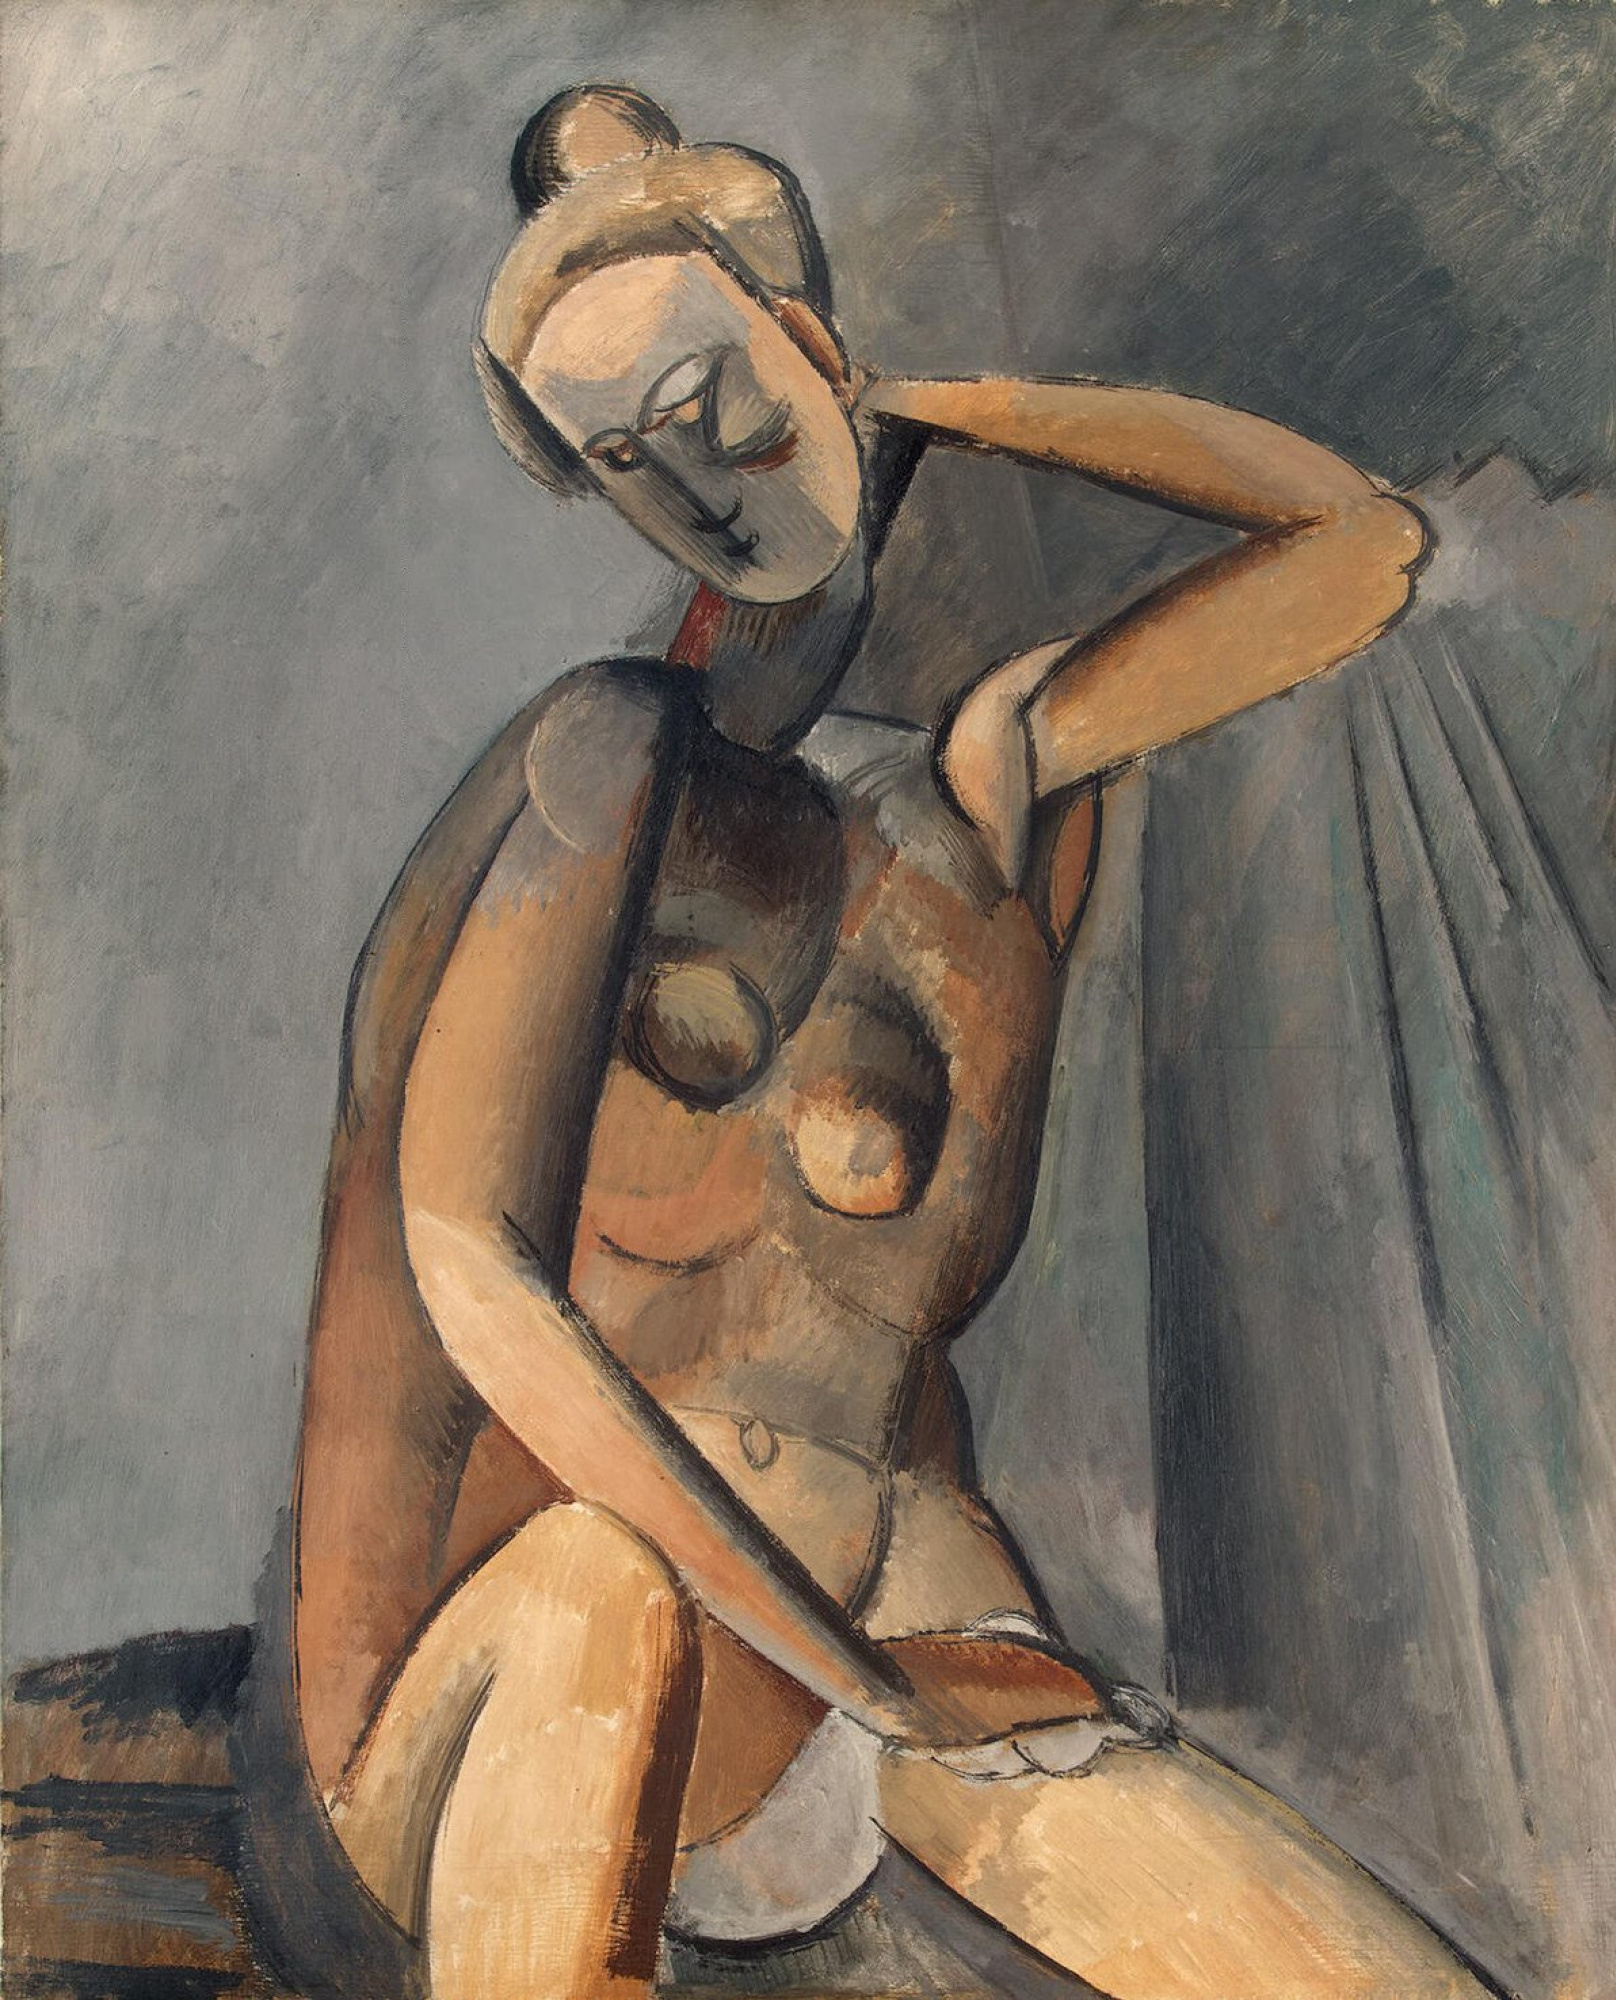 Pablo Picasso Naked woman, 1909, 81×100 cm: Description of the artwork